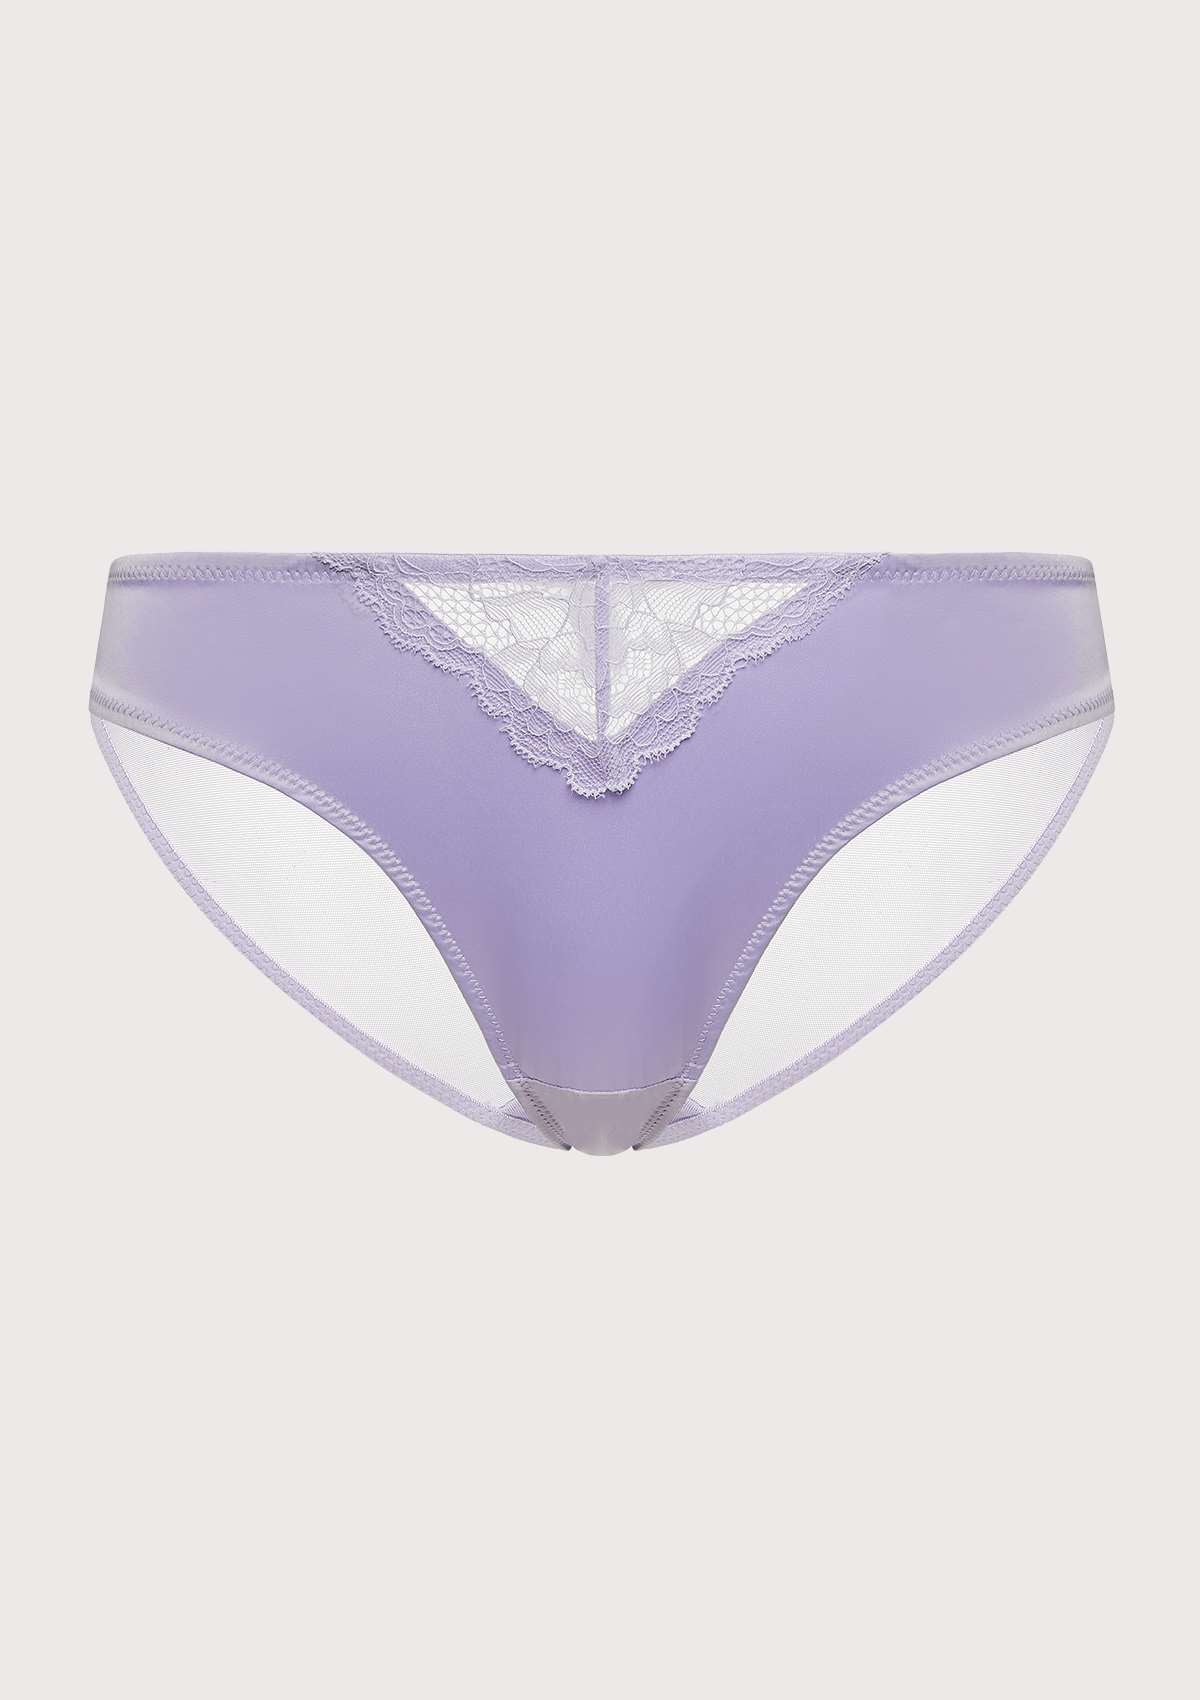 HSIA Foxy Satin Floral Lace-Trimmed Mesh Back Soft Bikini Underwear - XXL / Champagne